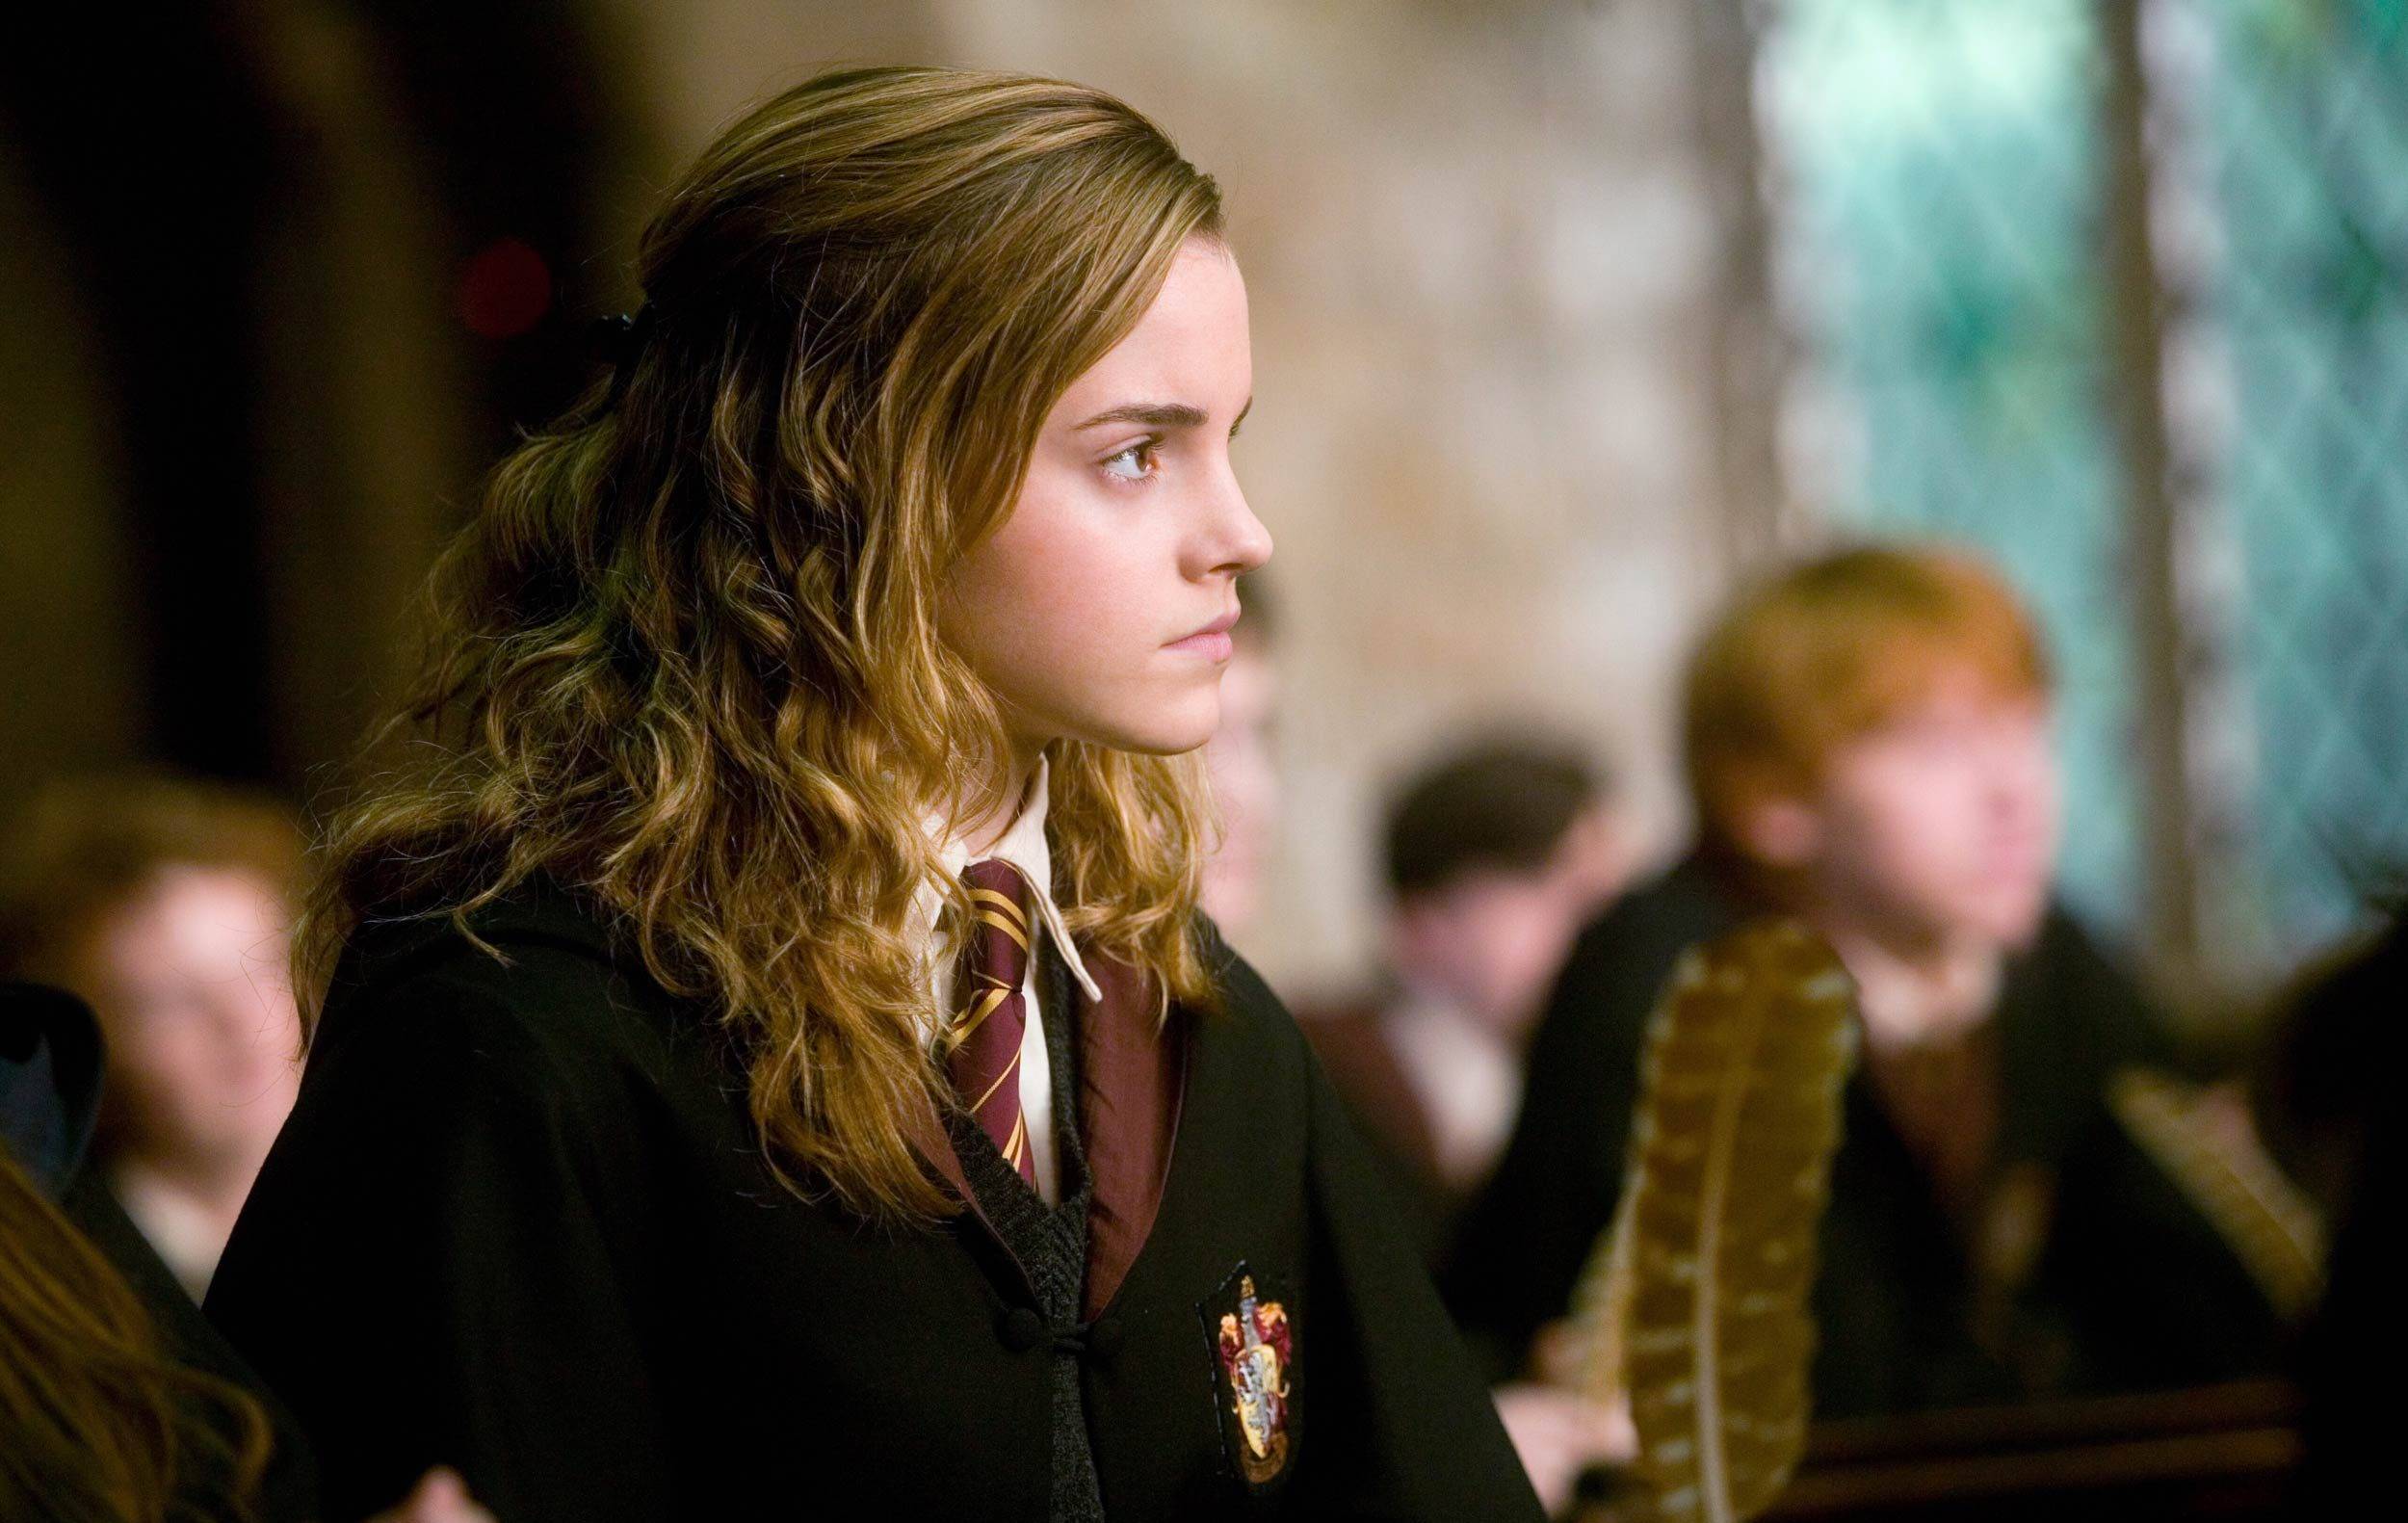 hermione harry potter 2015 torrent